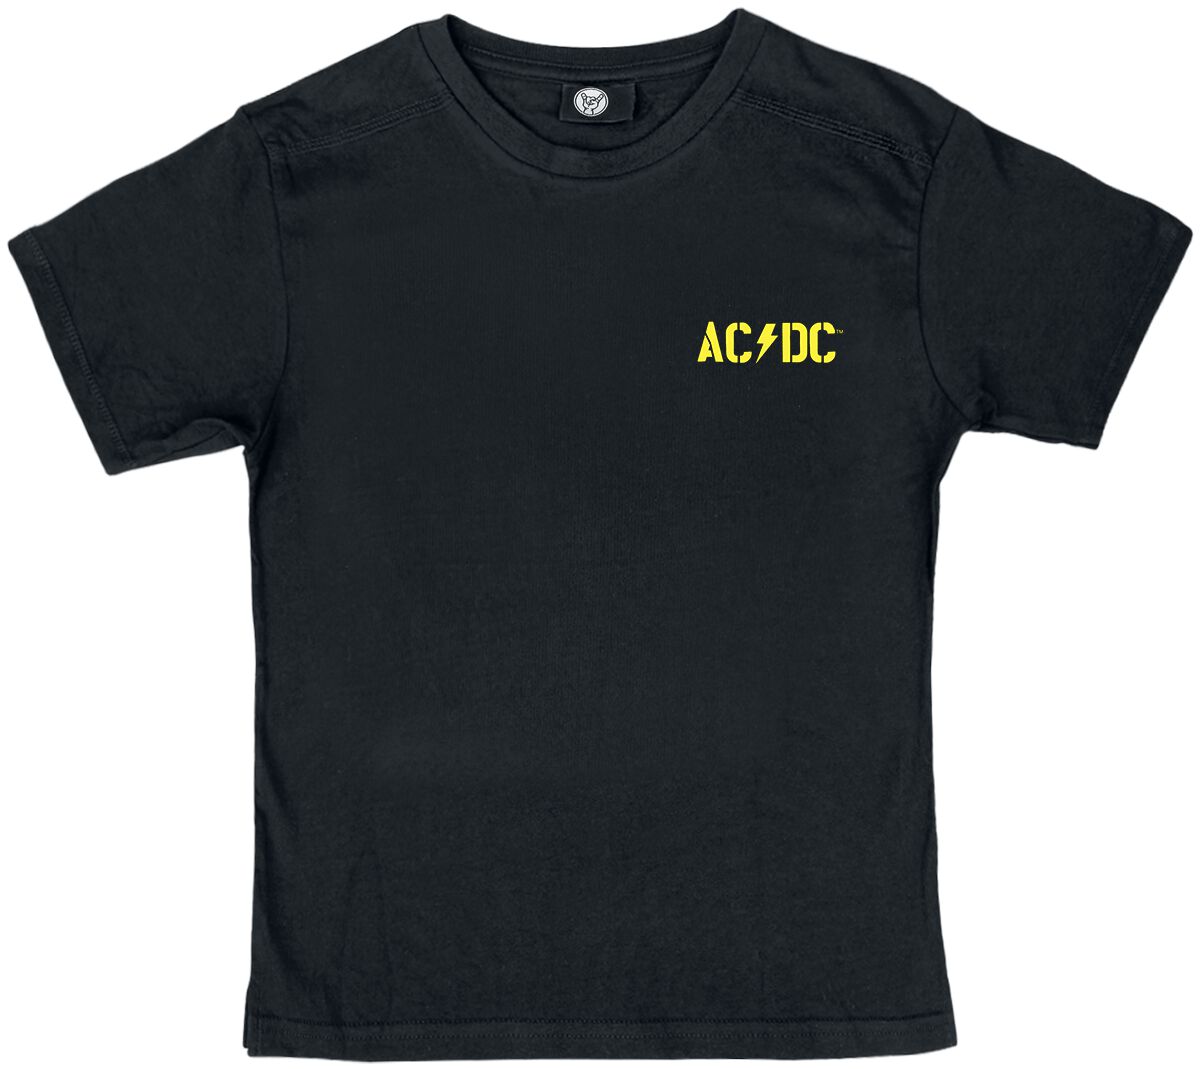 T-shirt de AC/DC - Metal-Kids - PWR UP - 92 - pour filles & garçonse - noir